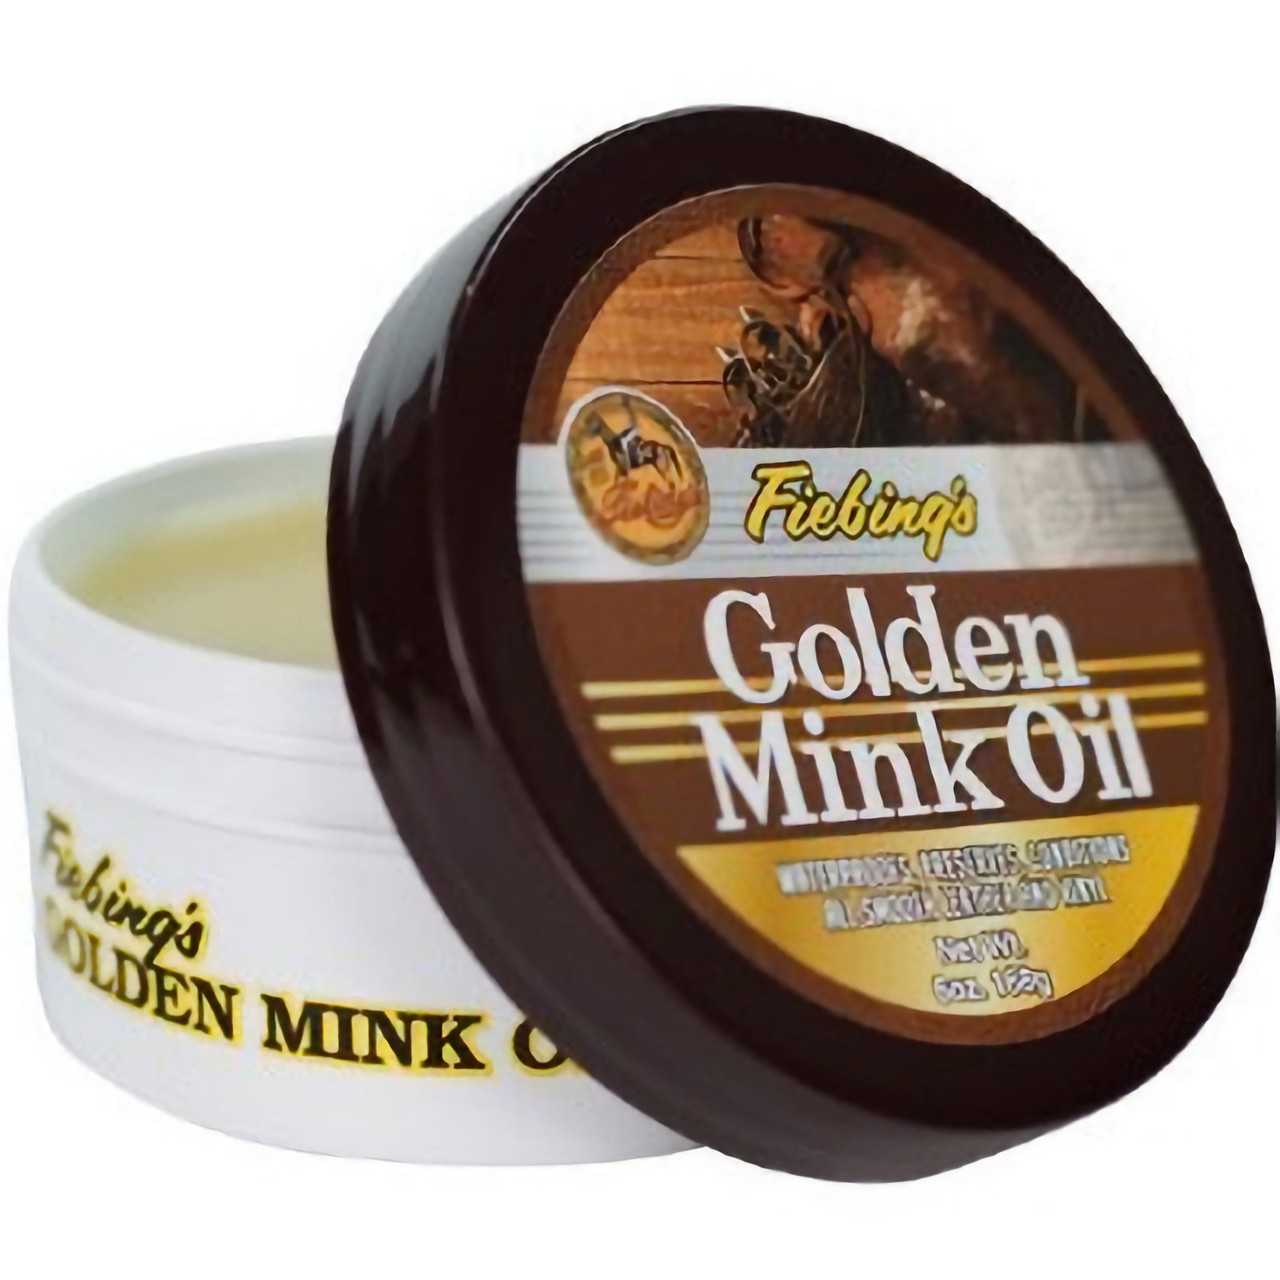 Golden mink oil paste open.